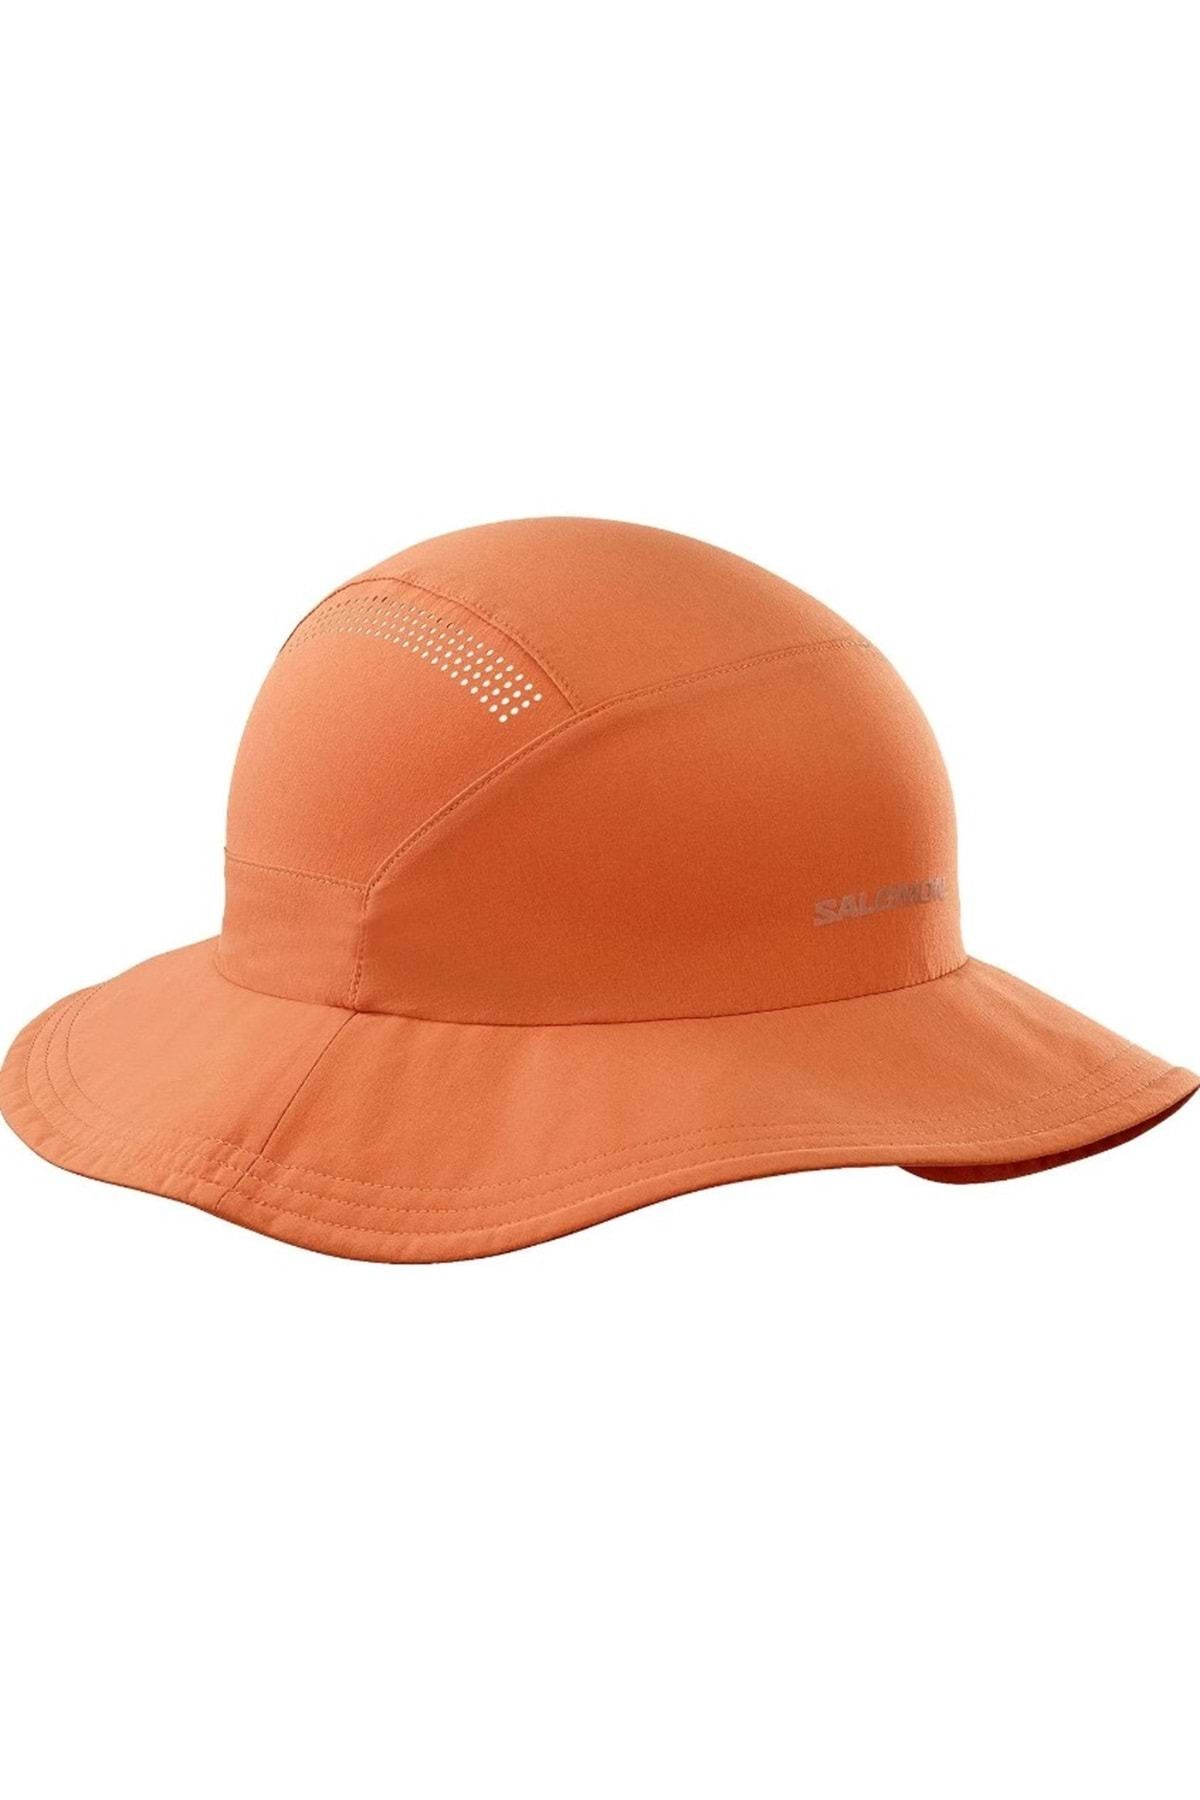 Salomon Mountain Hat Foter Unisex Şapka Turuncu